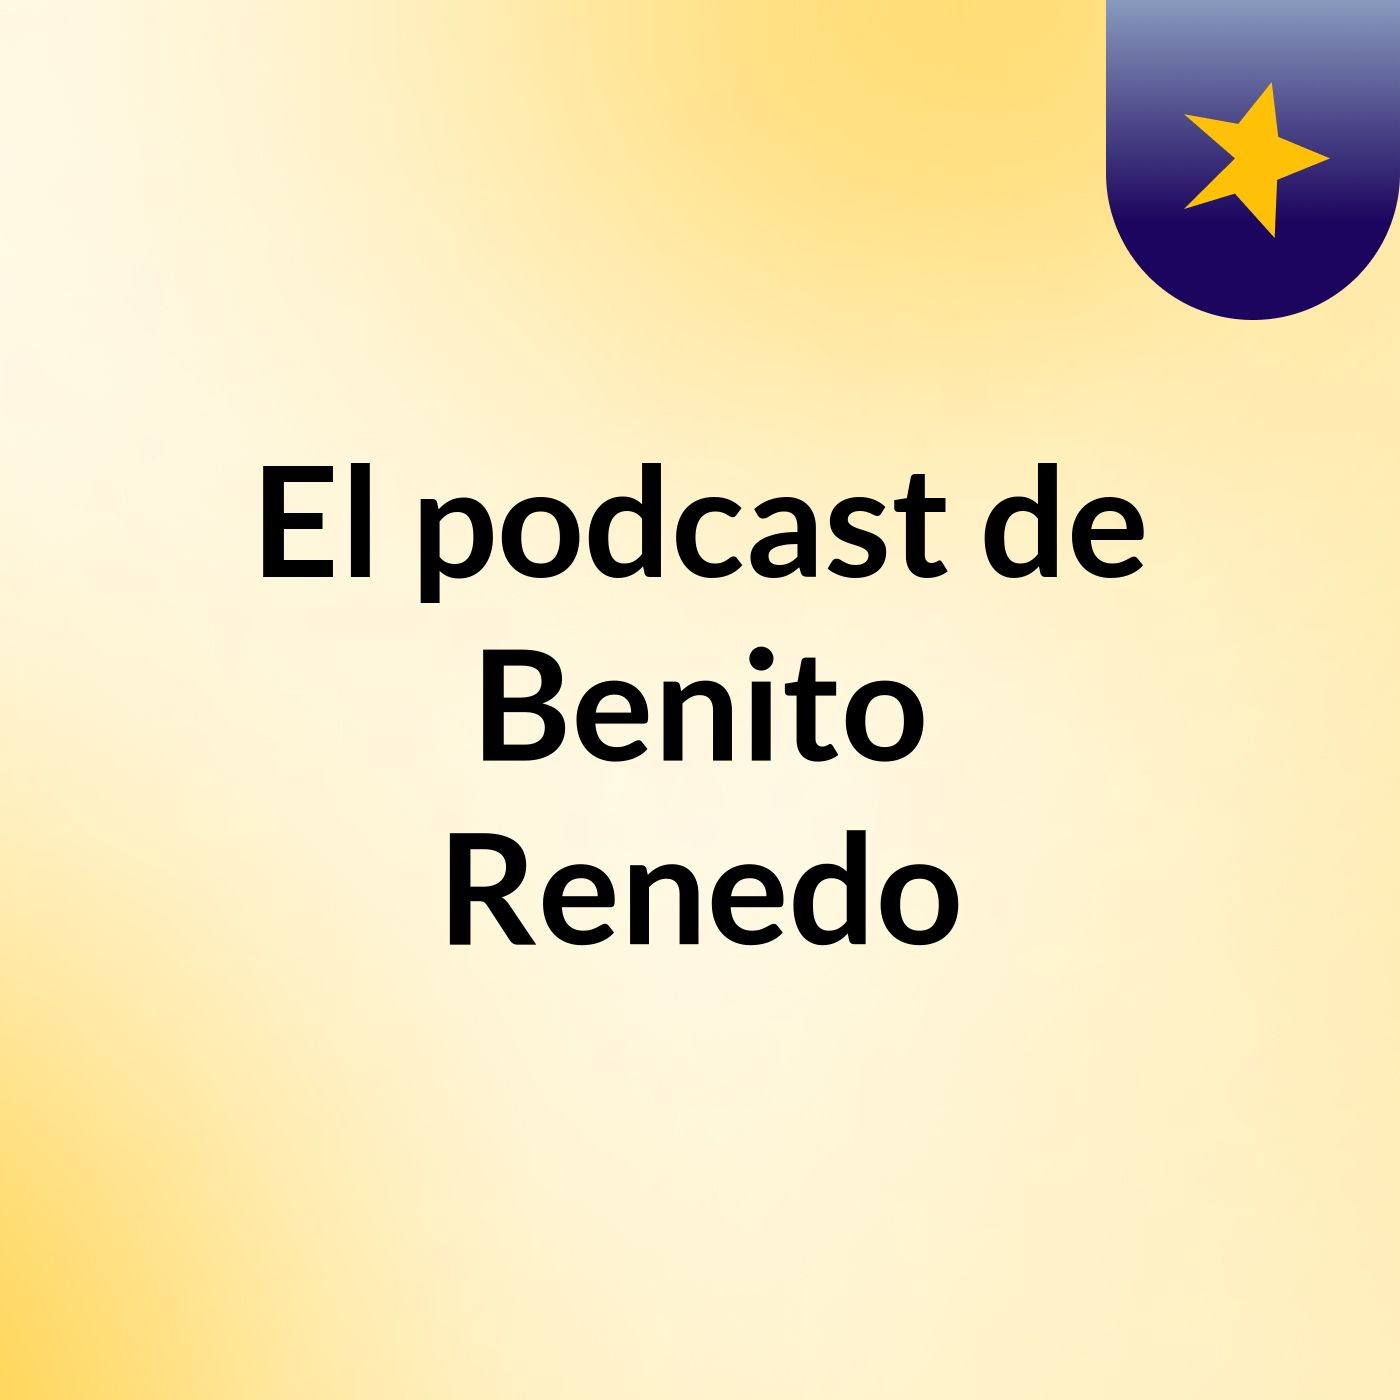 El podcast de Benito Renedo